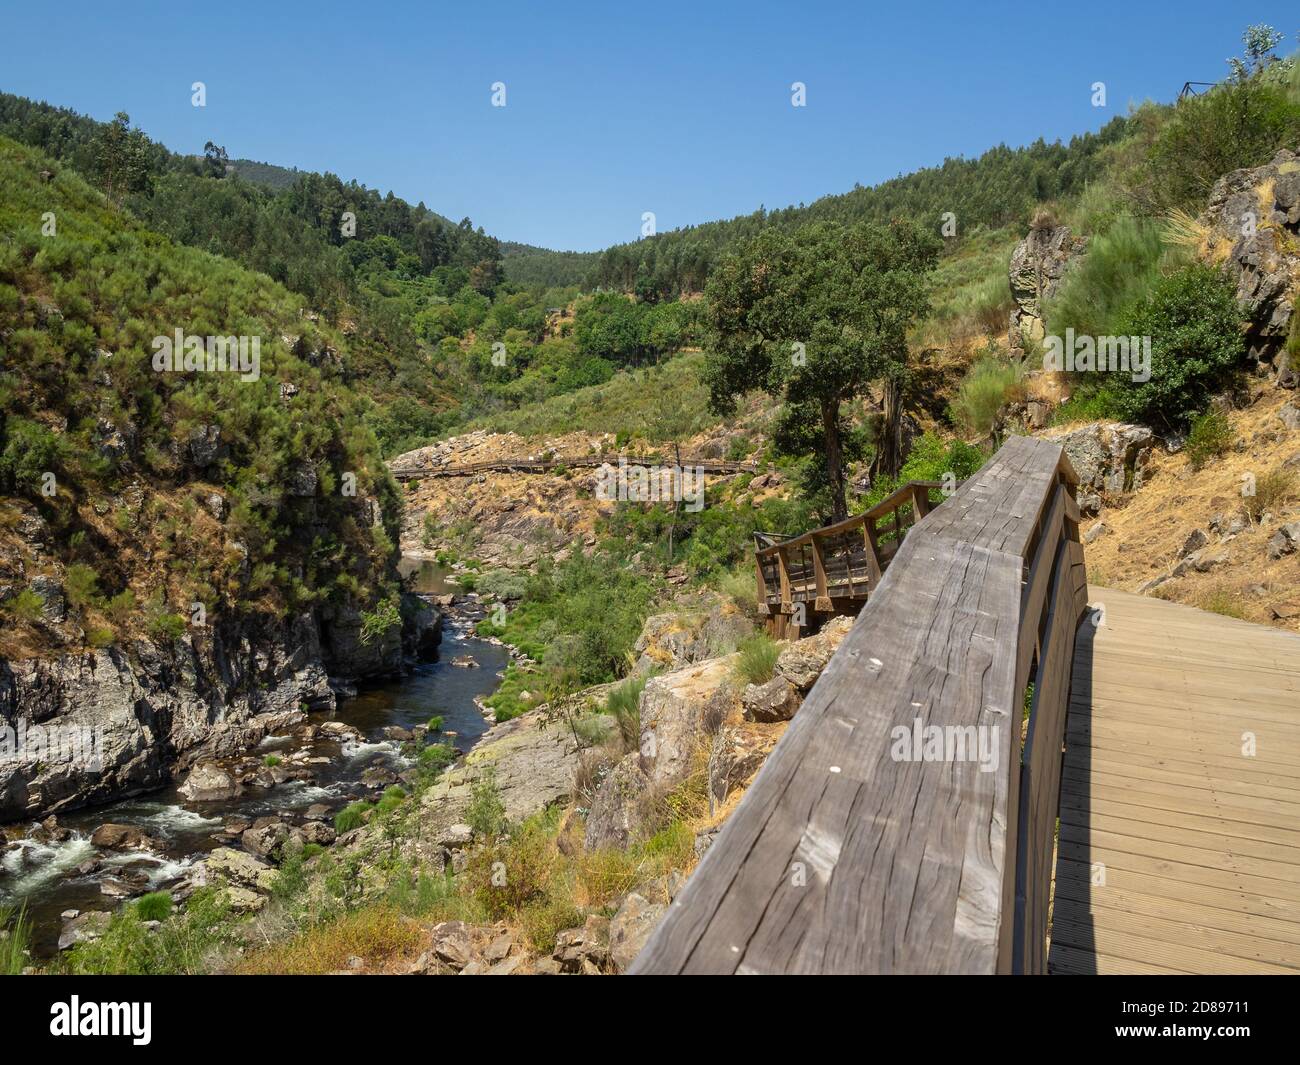 Passadiços do Paiva wooden walkway along the wild river Paiva gorge Stock Photo